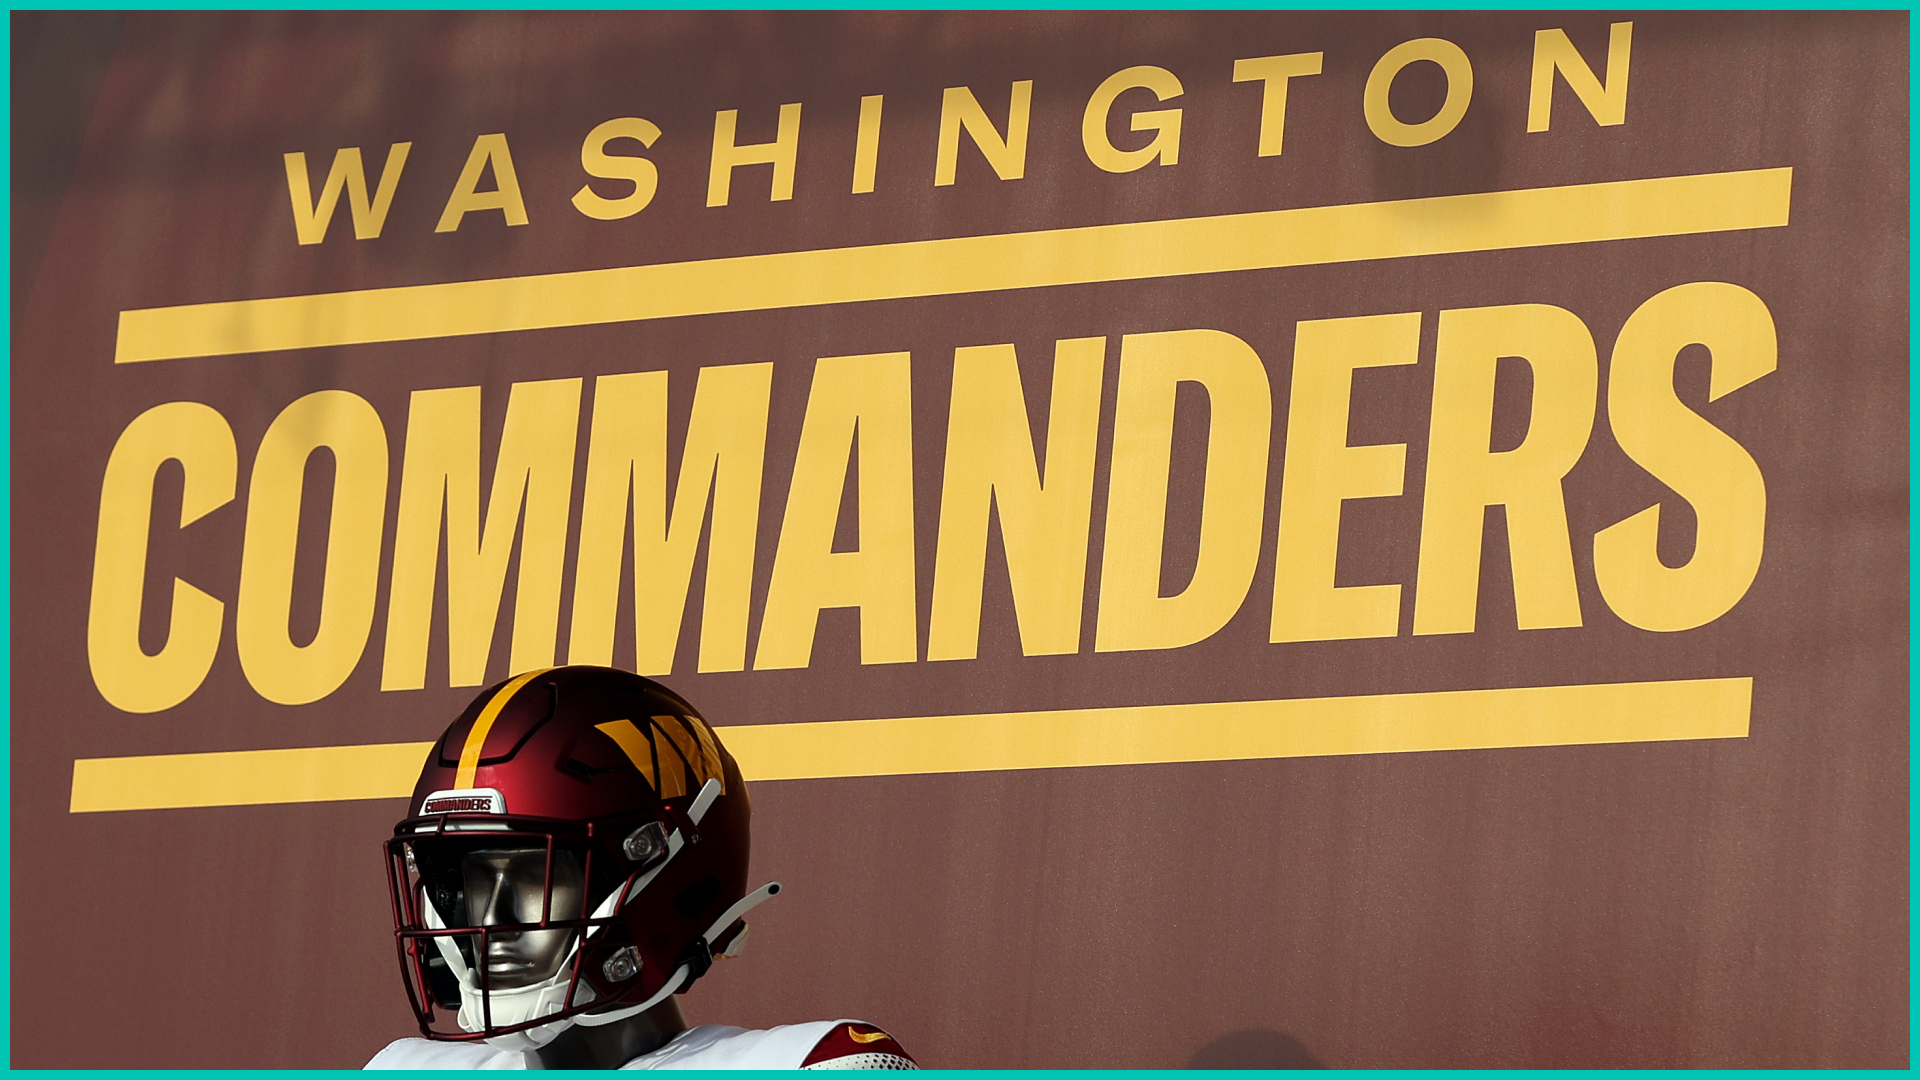 The new Washington Football Team debuts their new name, the Washington Commanders